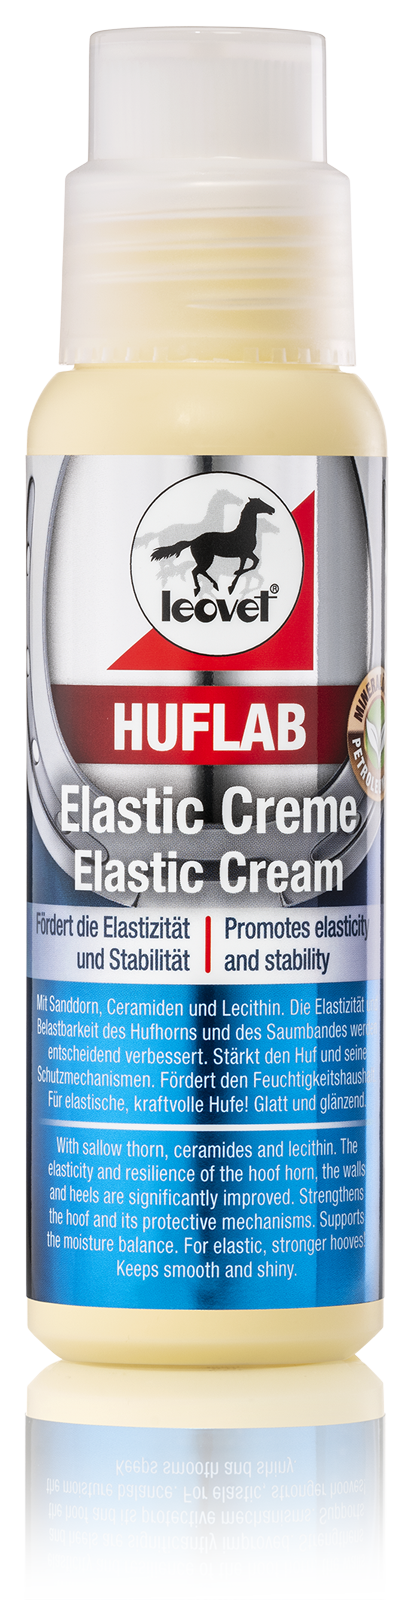  Leovet Huflab Elastic Creme